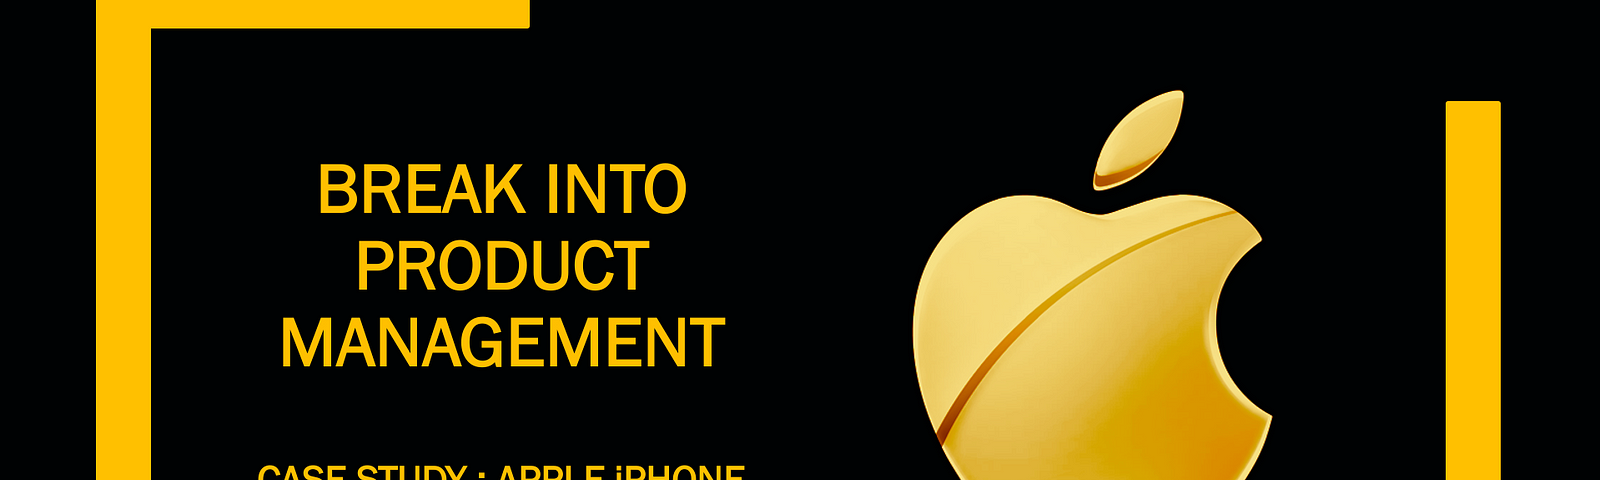 Break into Product Management — Case Study: iPhone